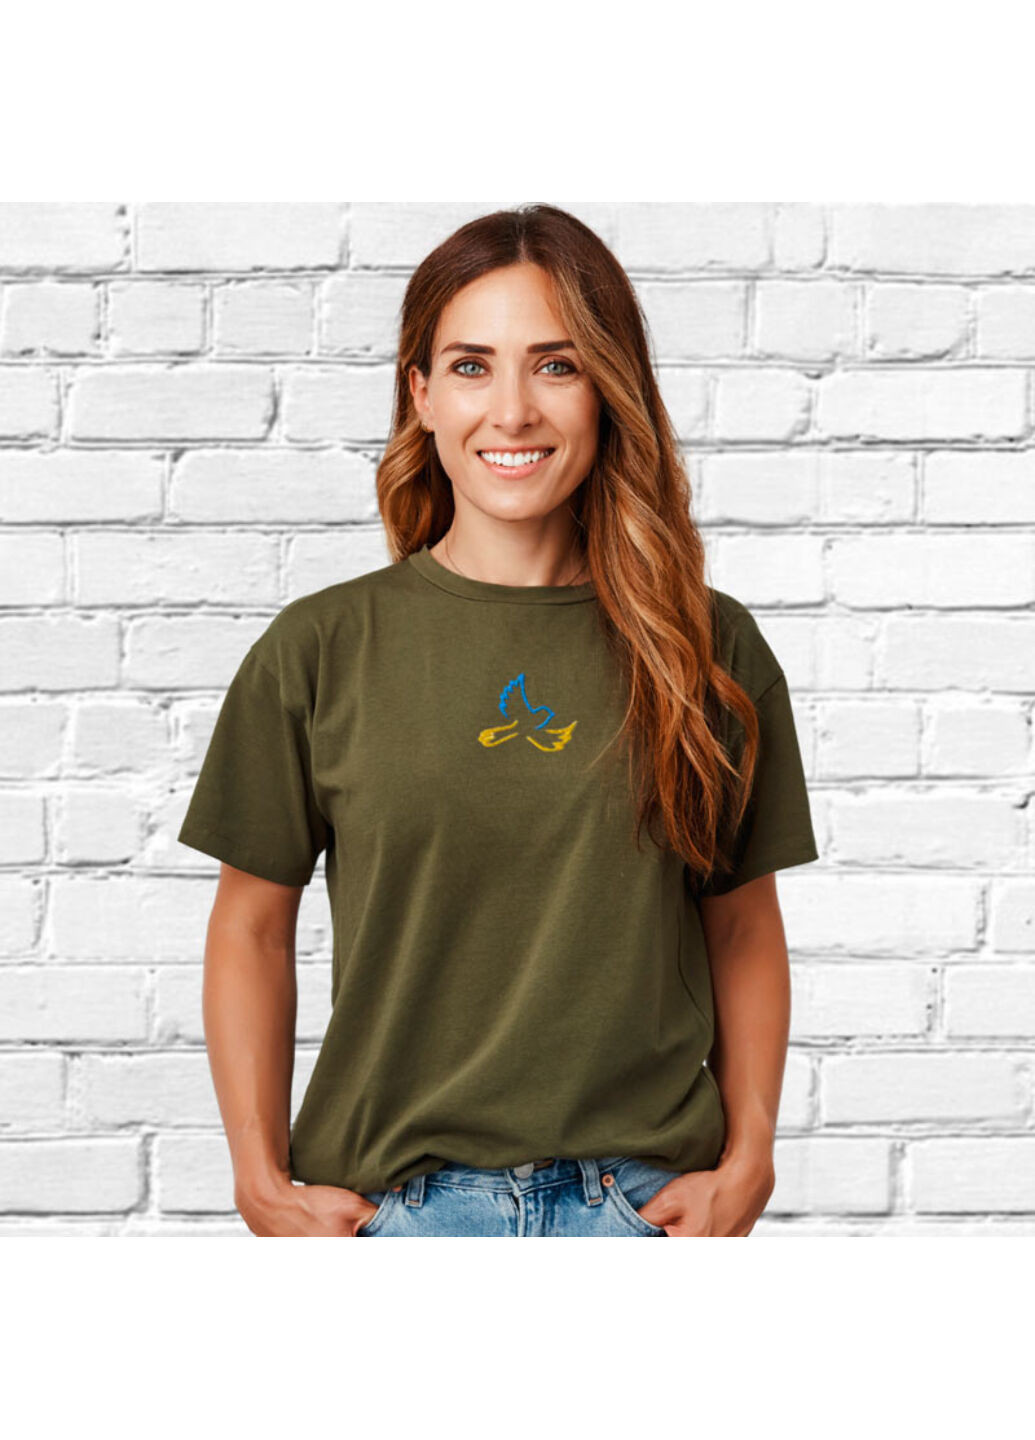 Хаки (оливковая) футболка з вишивкою голуба 02-2 женская хаки 2xl No Brand